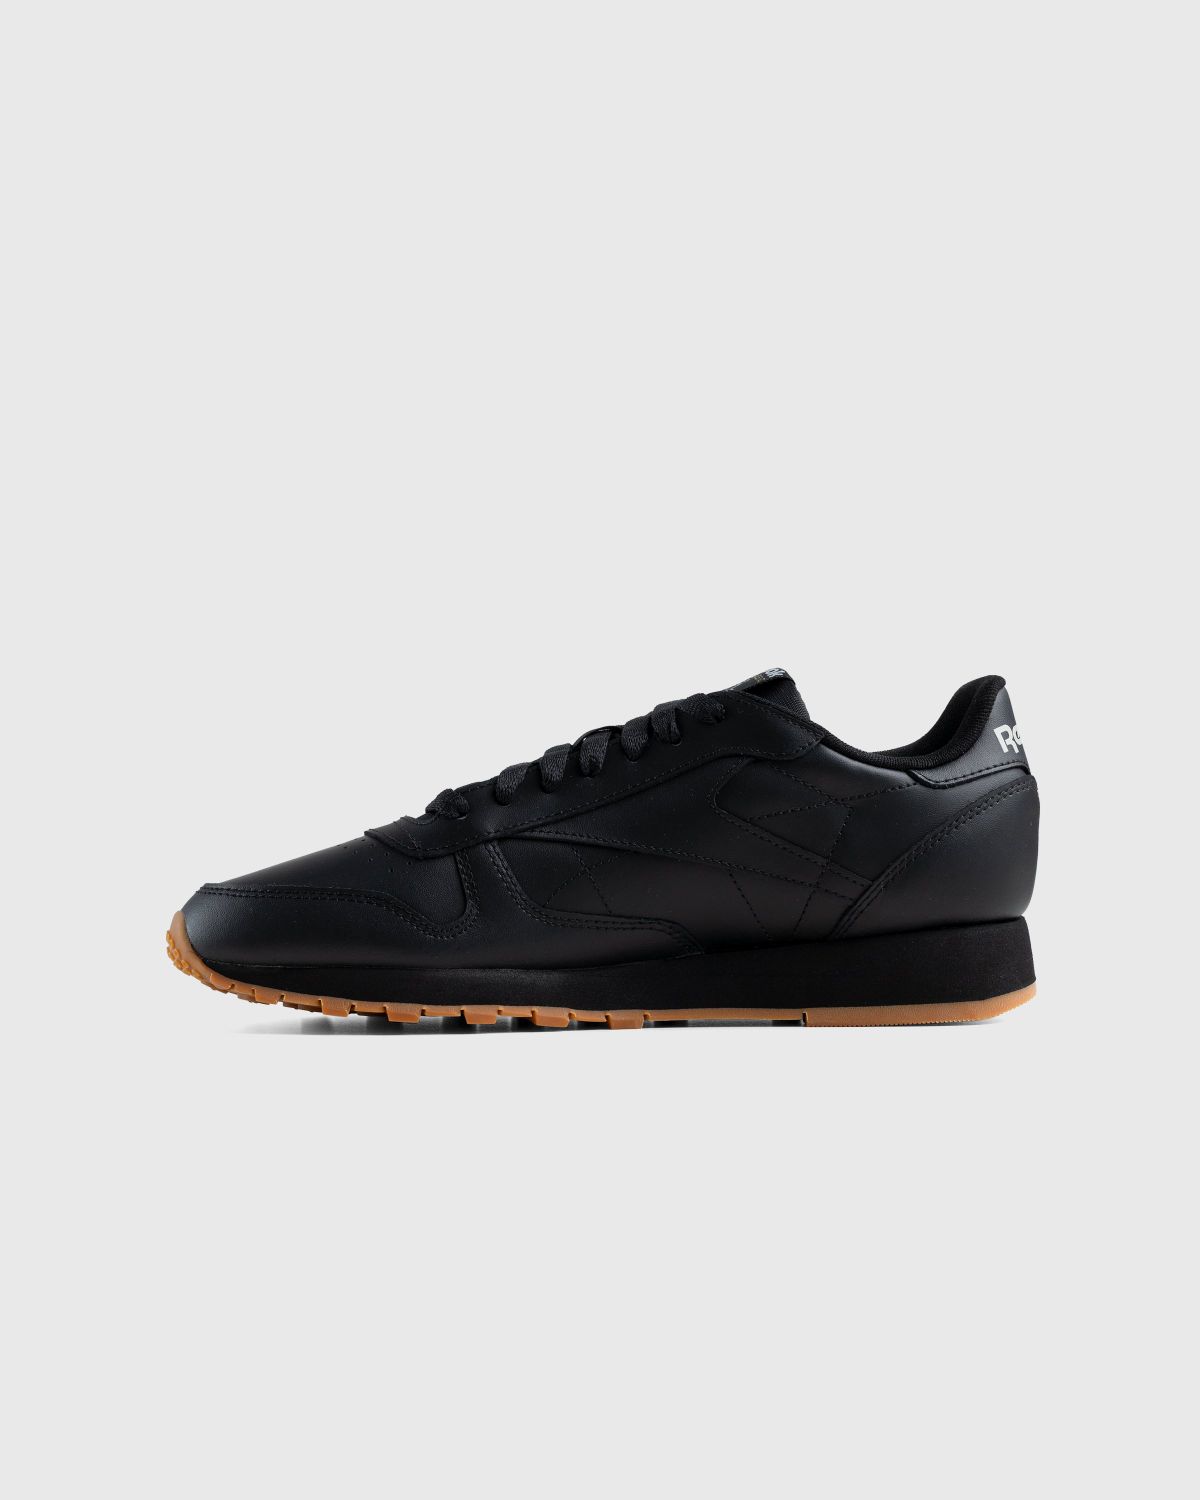 Reebok – Classic Leather Black - Sneakers - Black - Image 4